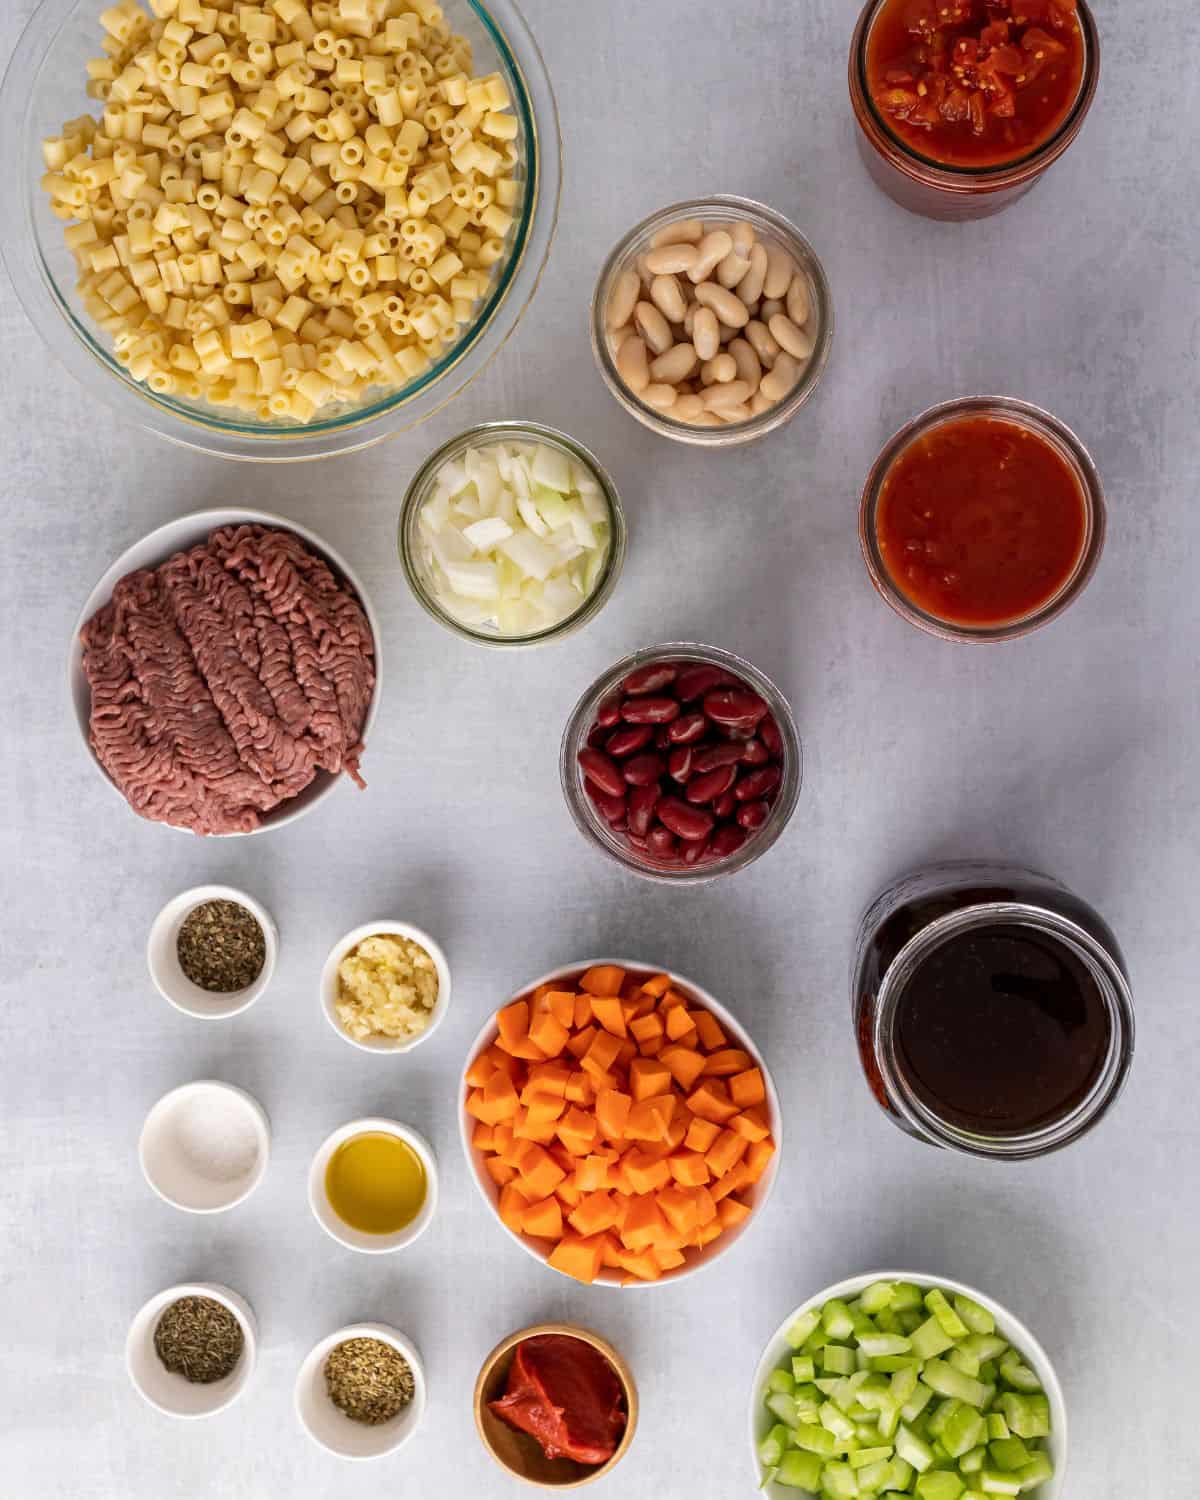 ingredients for pasta fagioli.